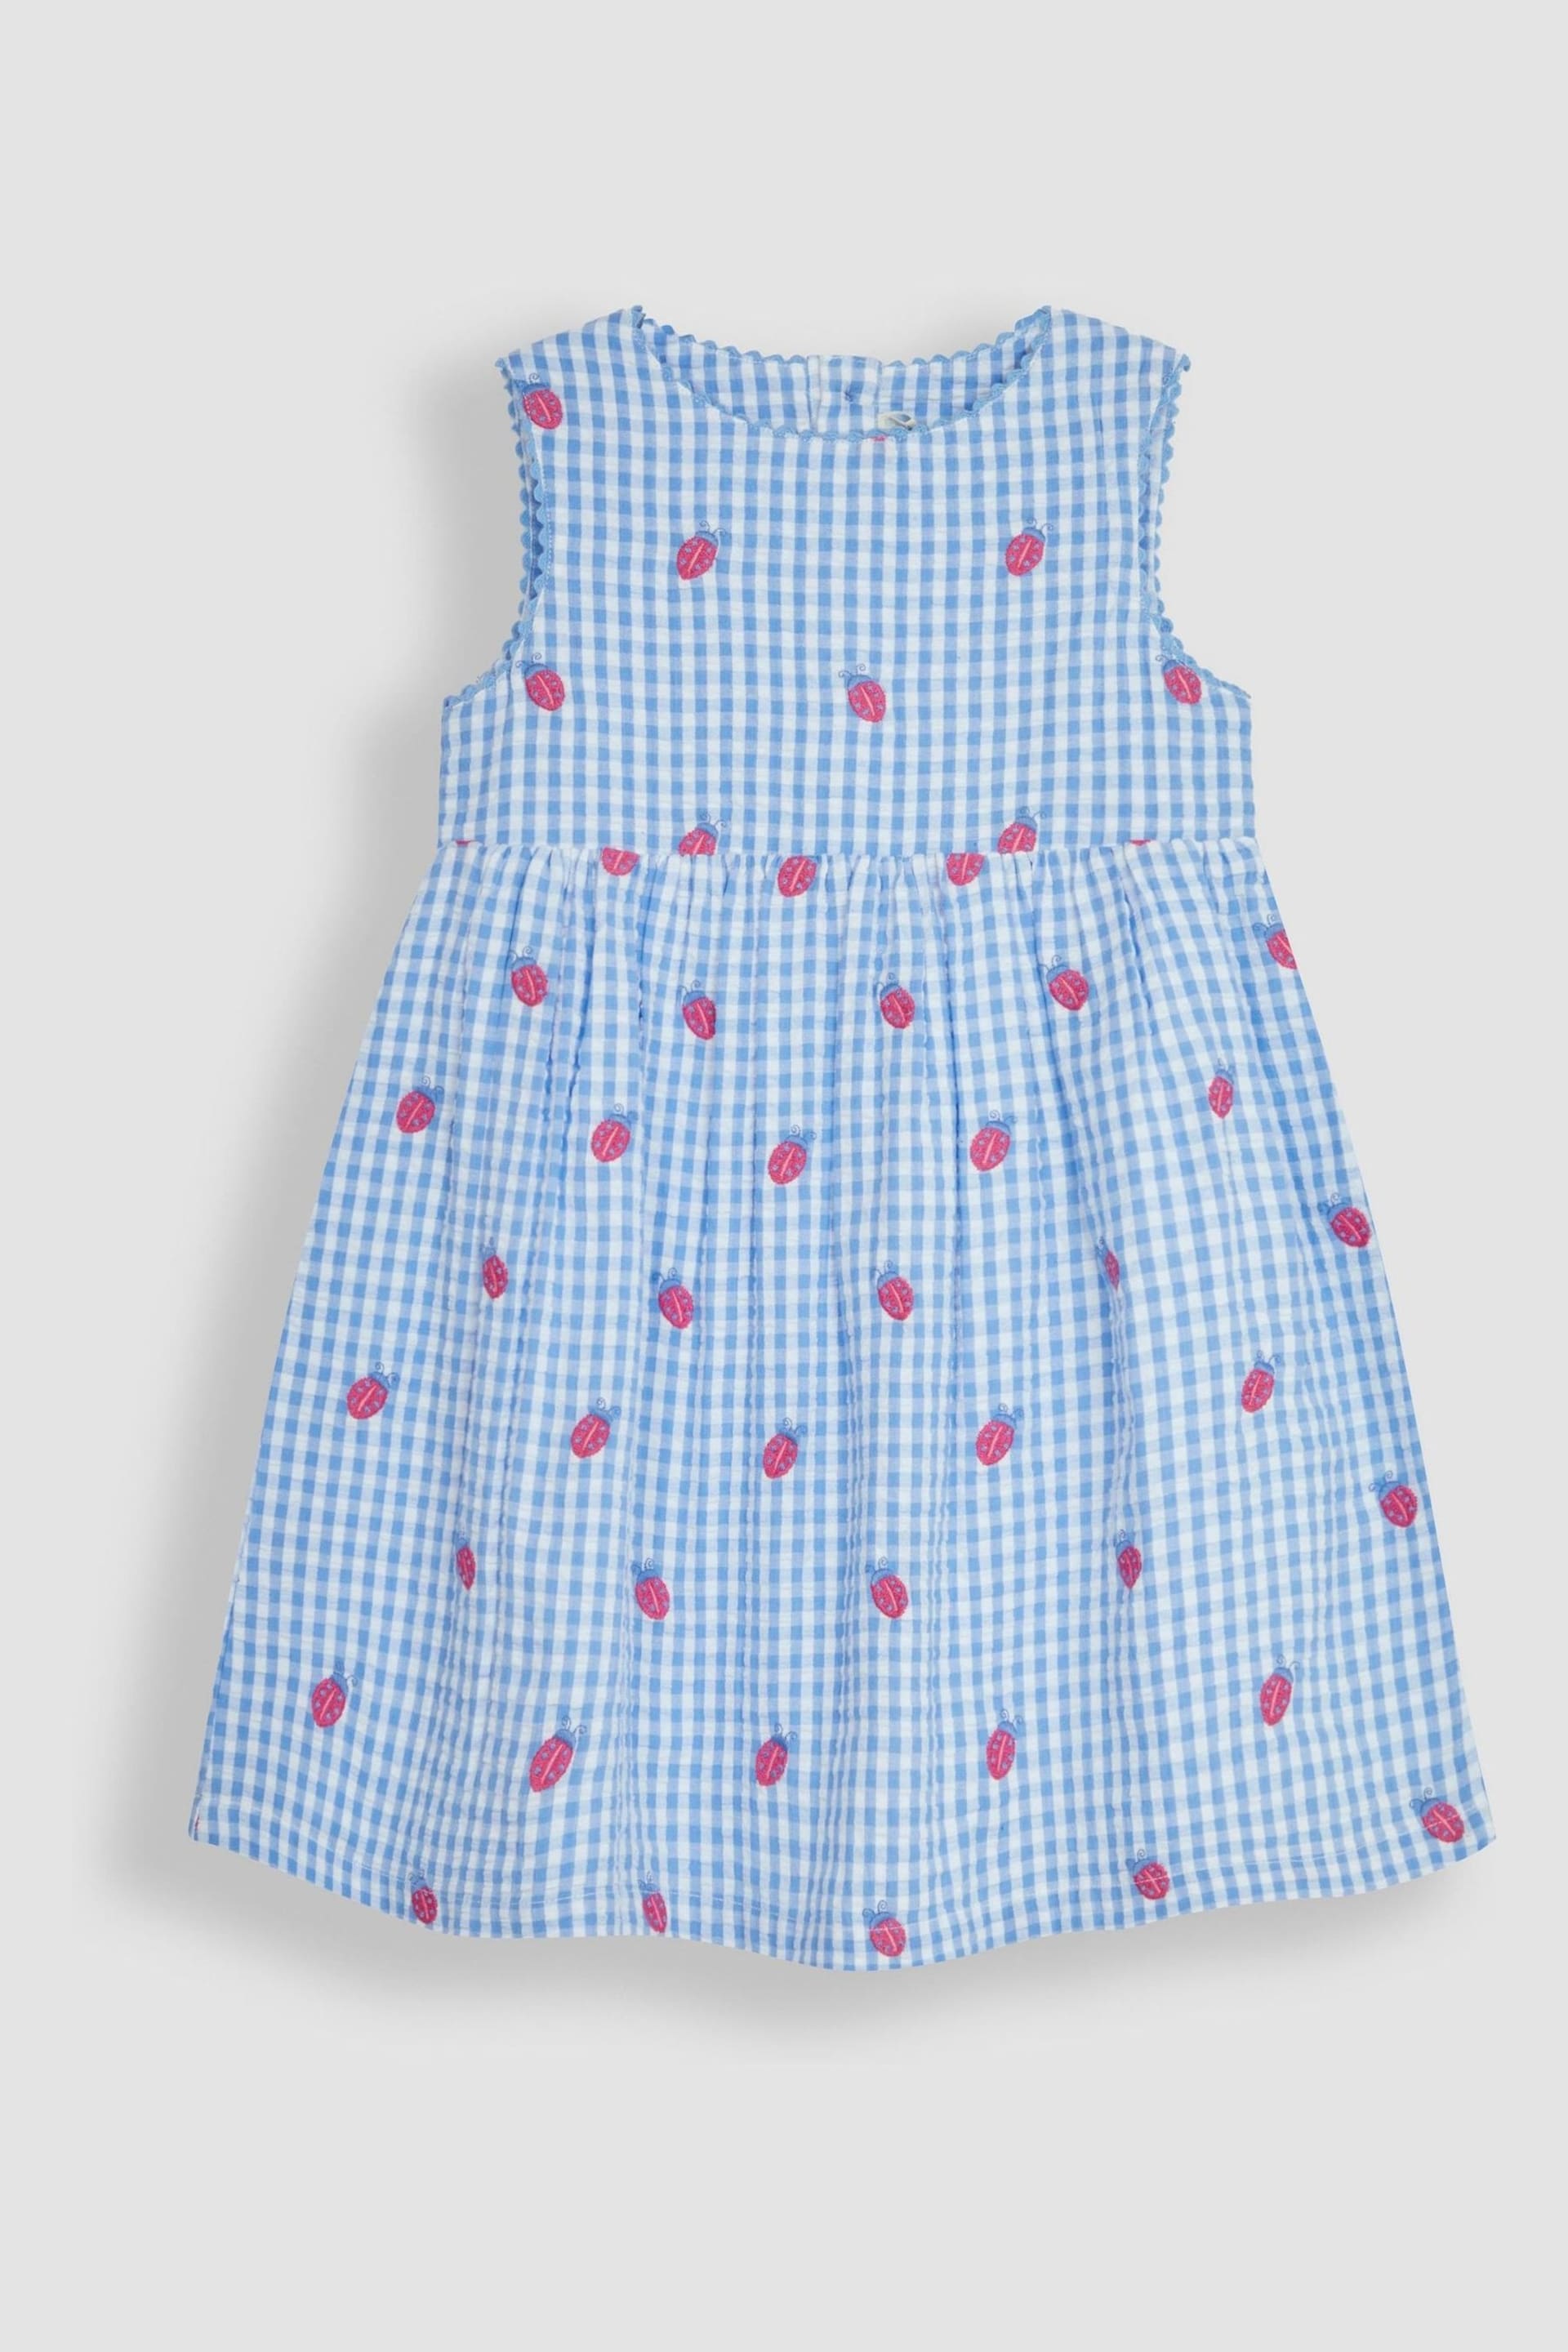 JoJo Maman Bébé Blue Ladybird Gingham Embroidered Summer Dress - Image 3 of 5